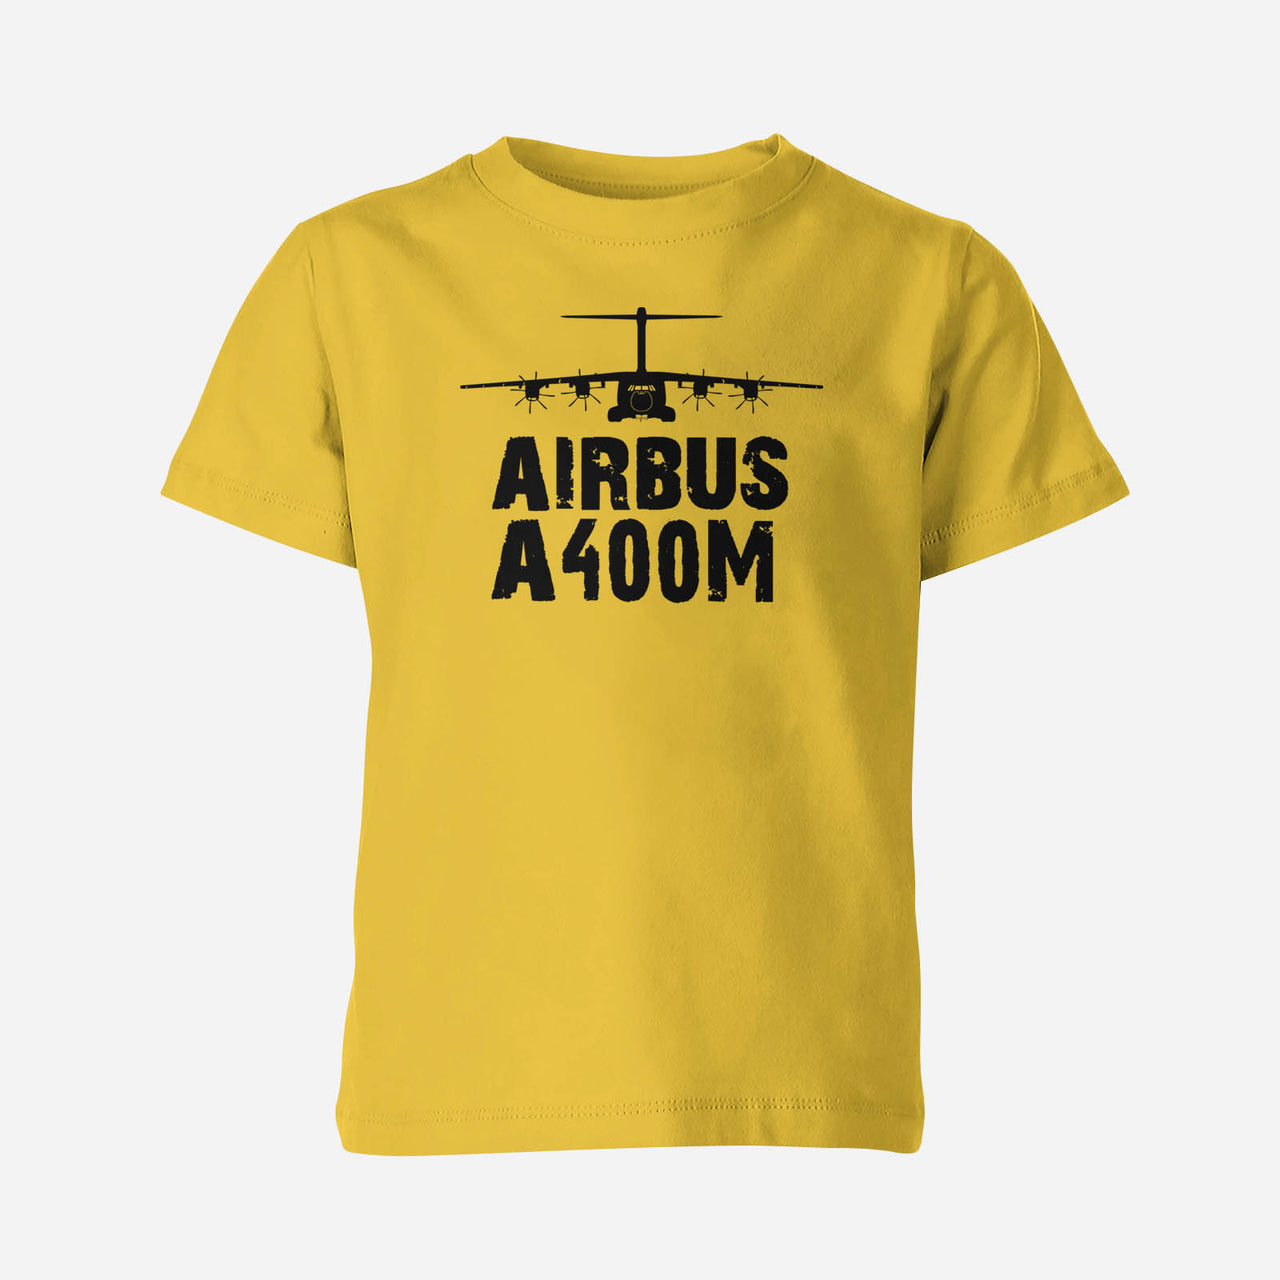 Airbus A400M & Plane Designed Children T-Shirts